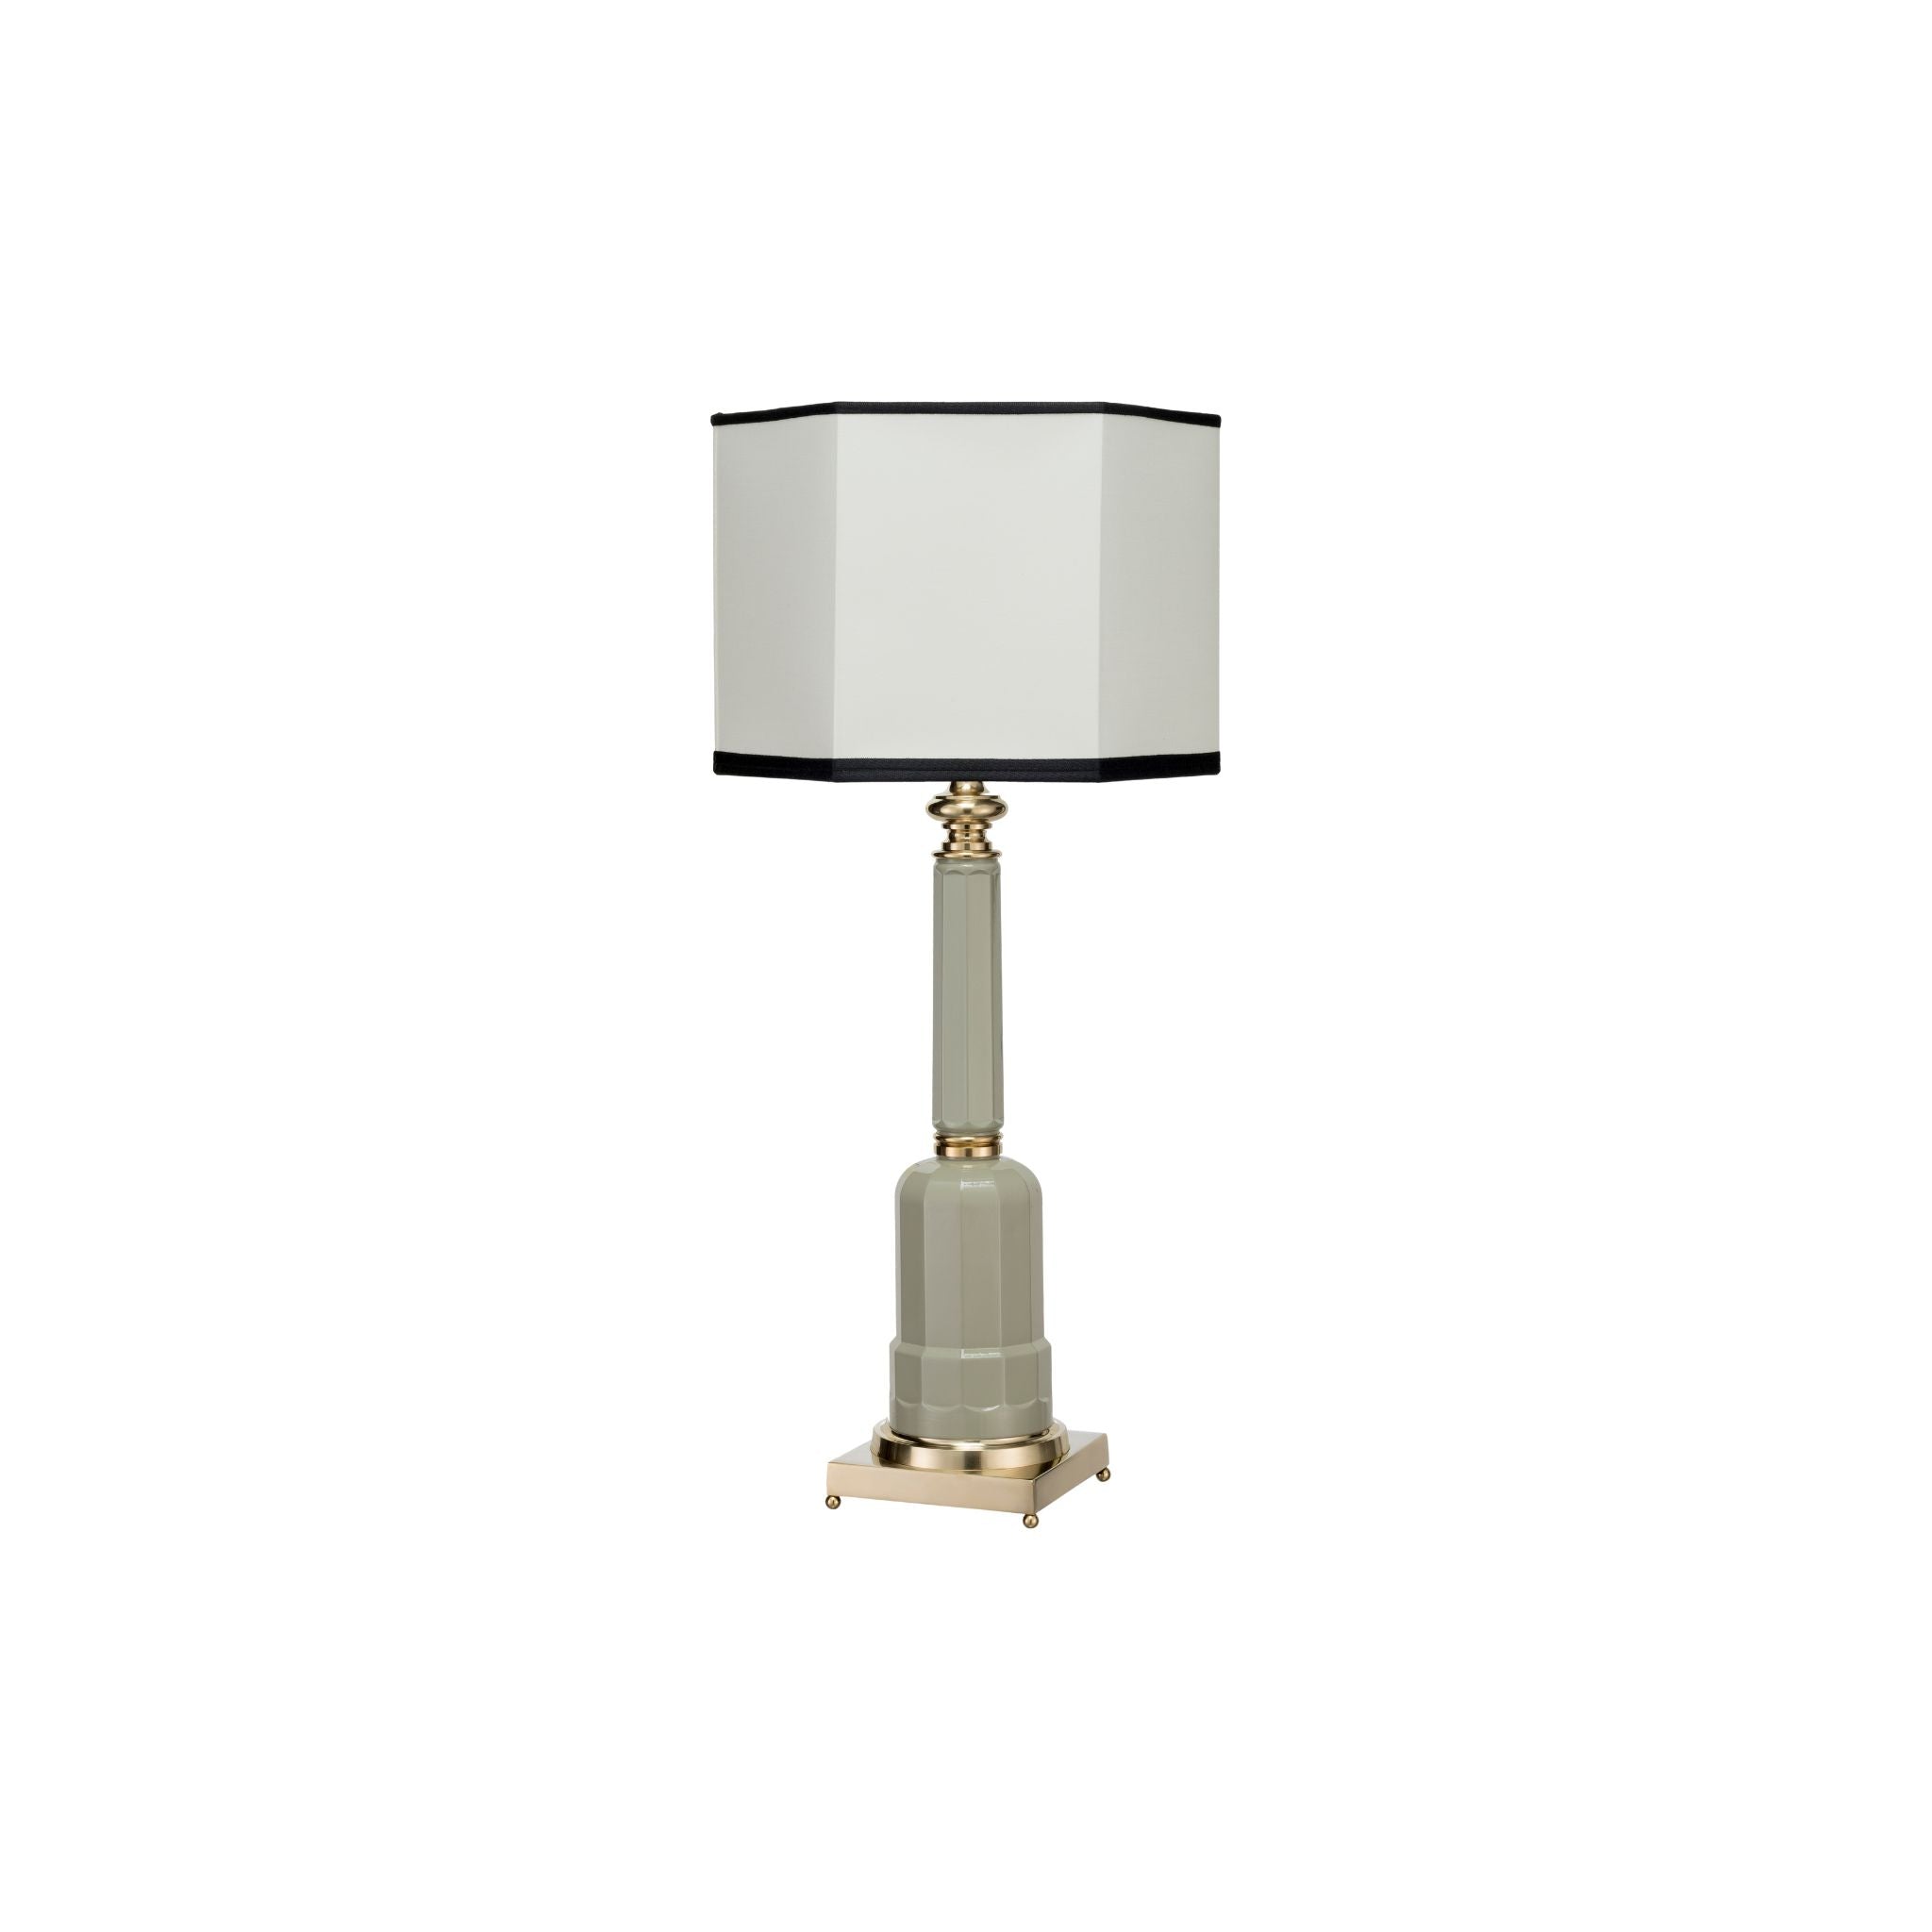 Jacaranda pebble grey brass table lamp - ilbronzetto